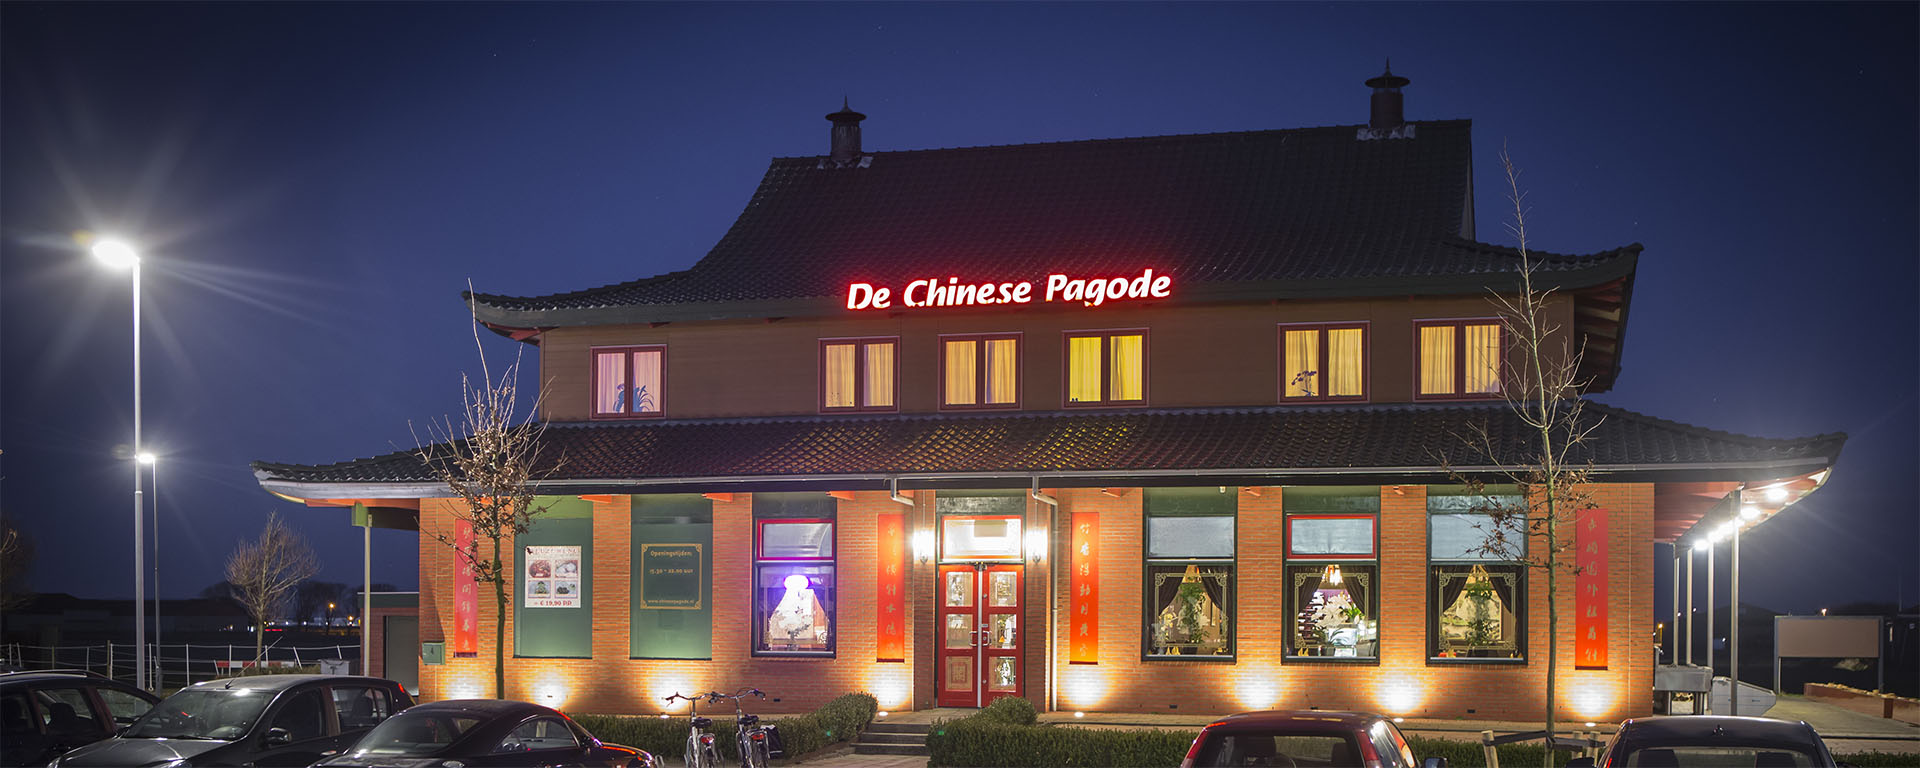 (c) Chinesepagode.nl